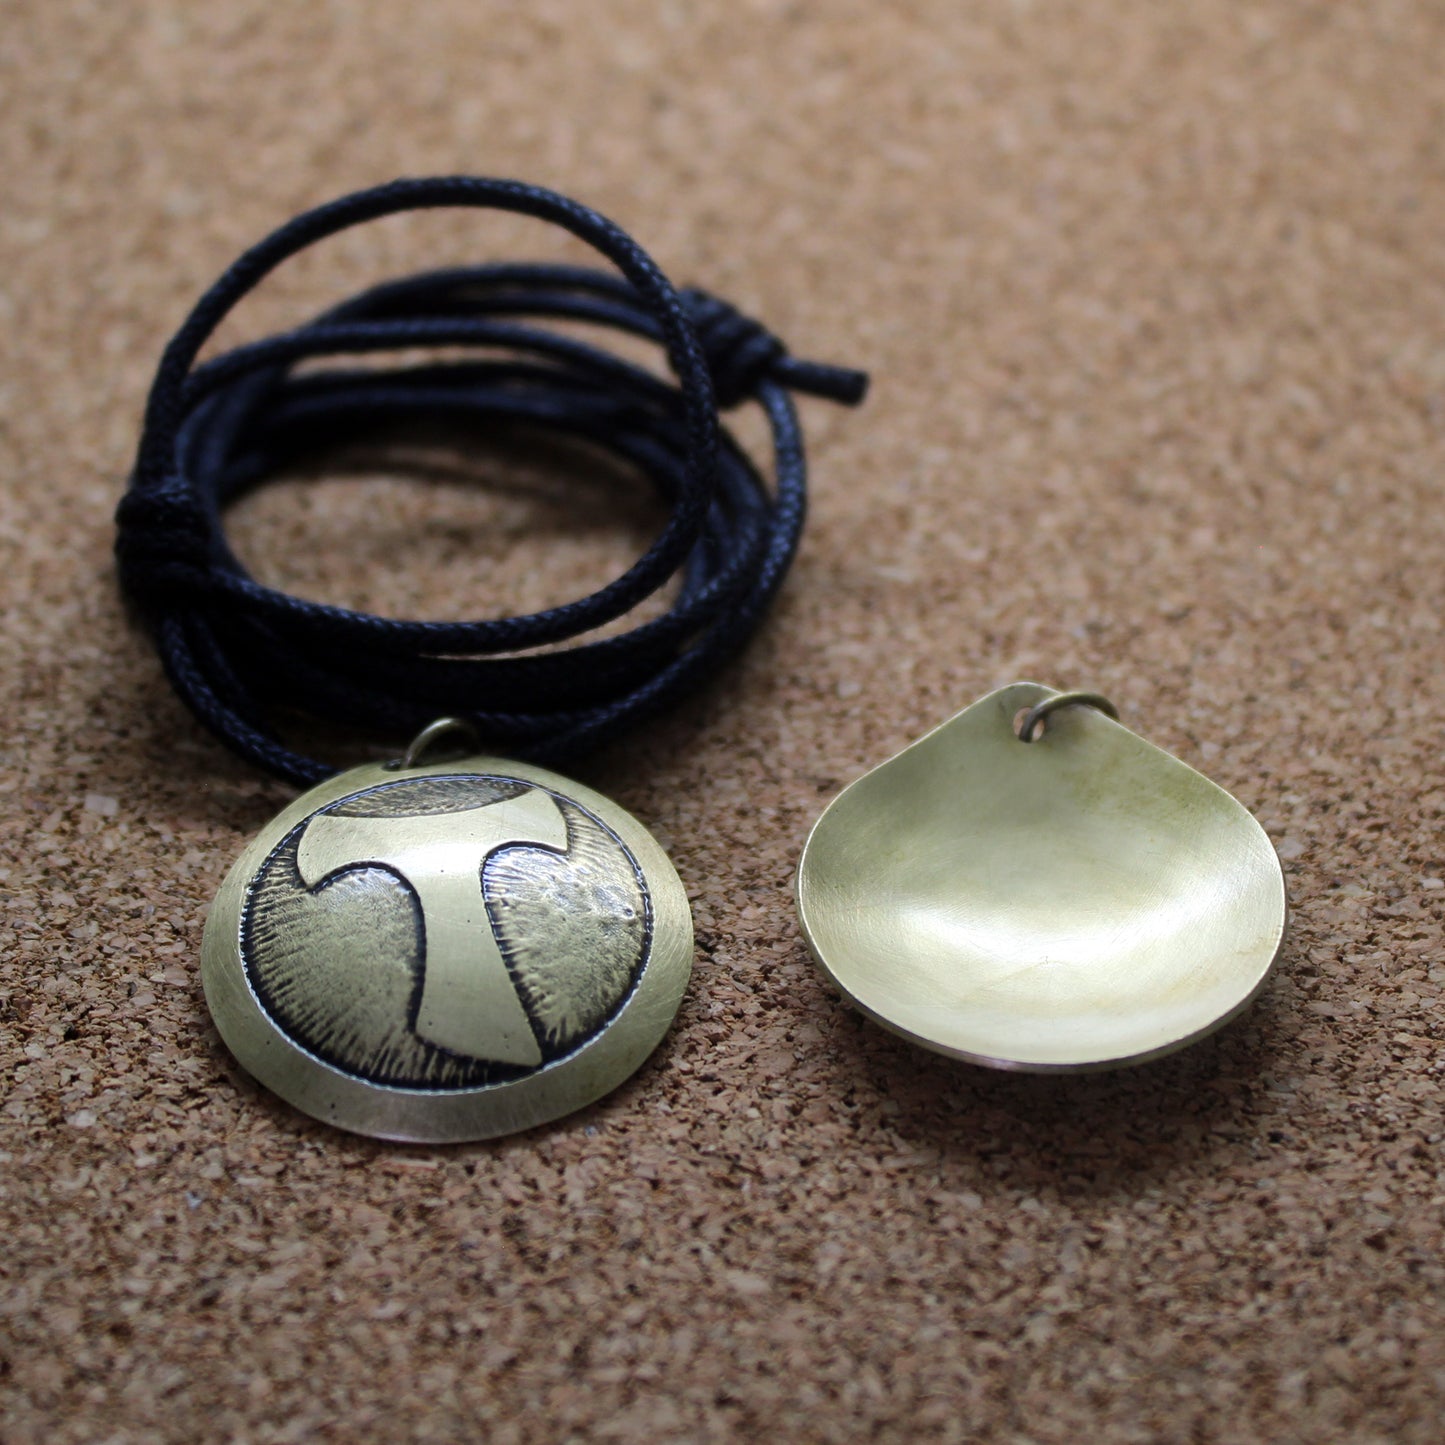 Tau of the Camino de Santiago brass pendant